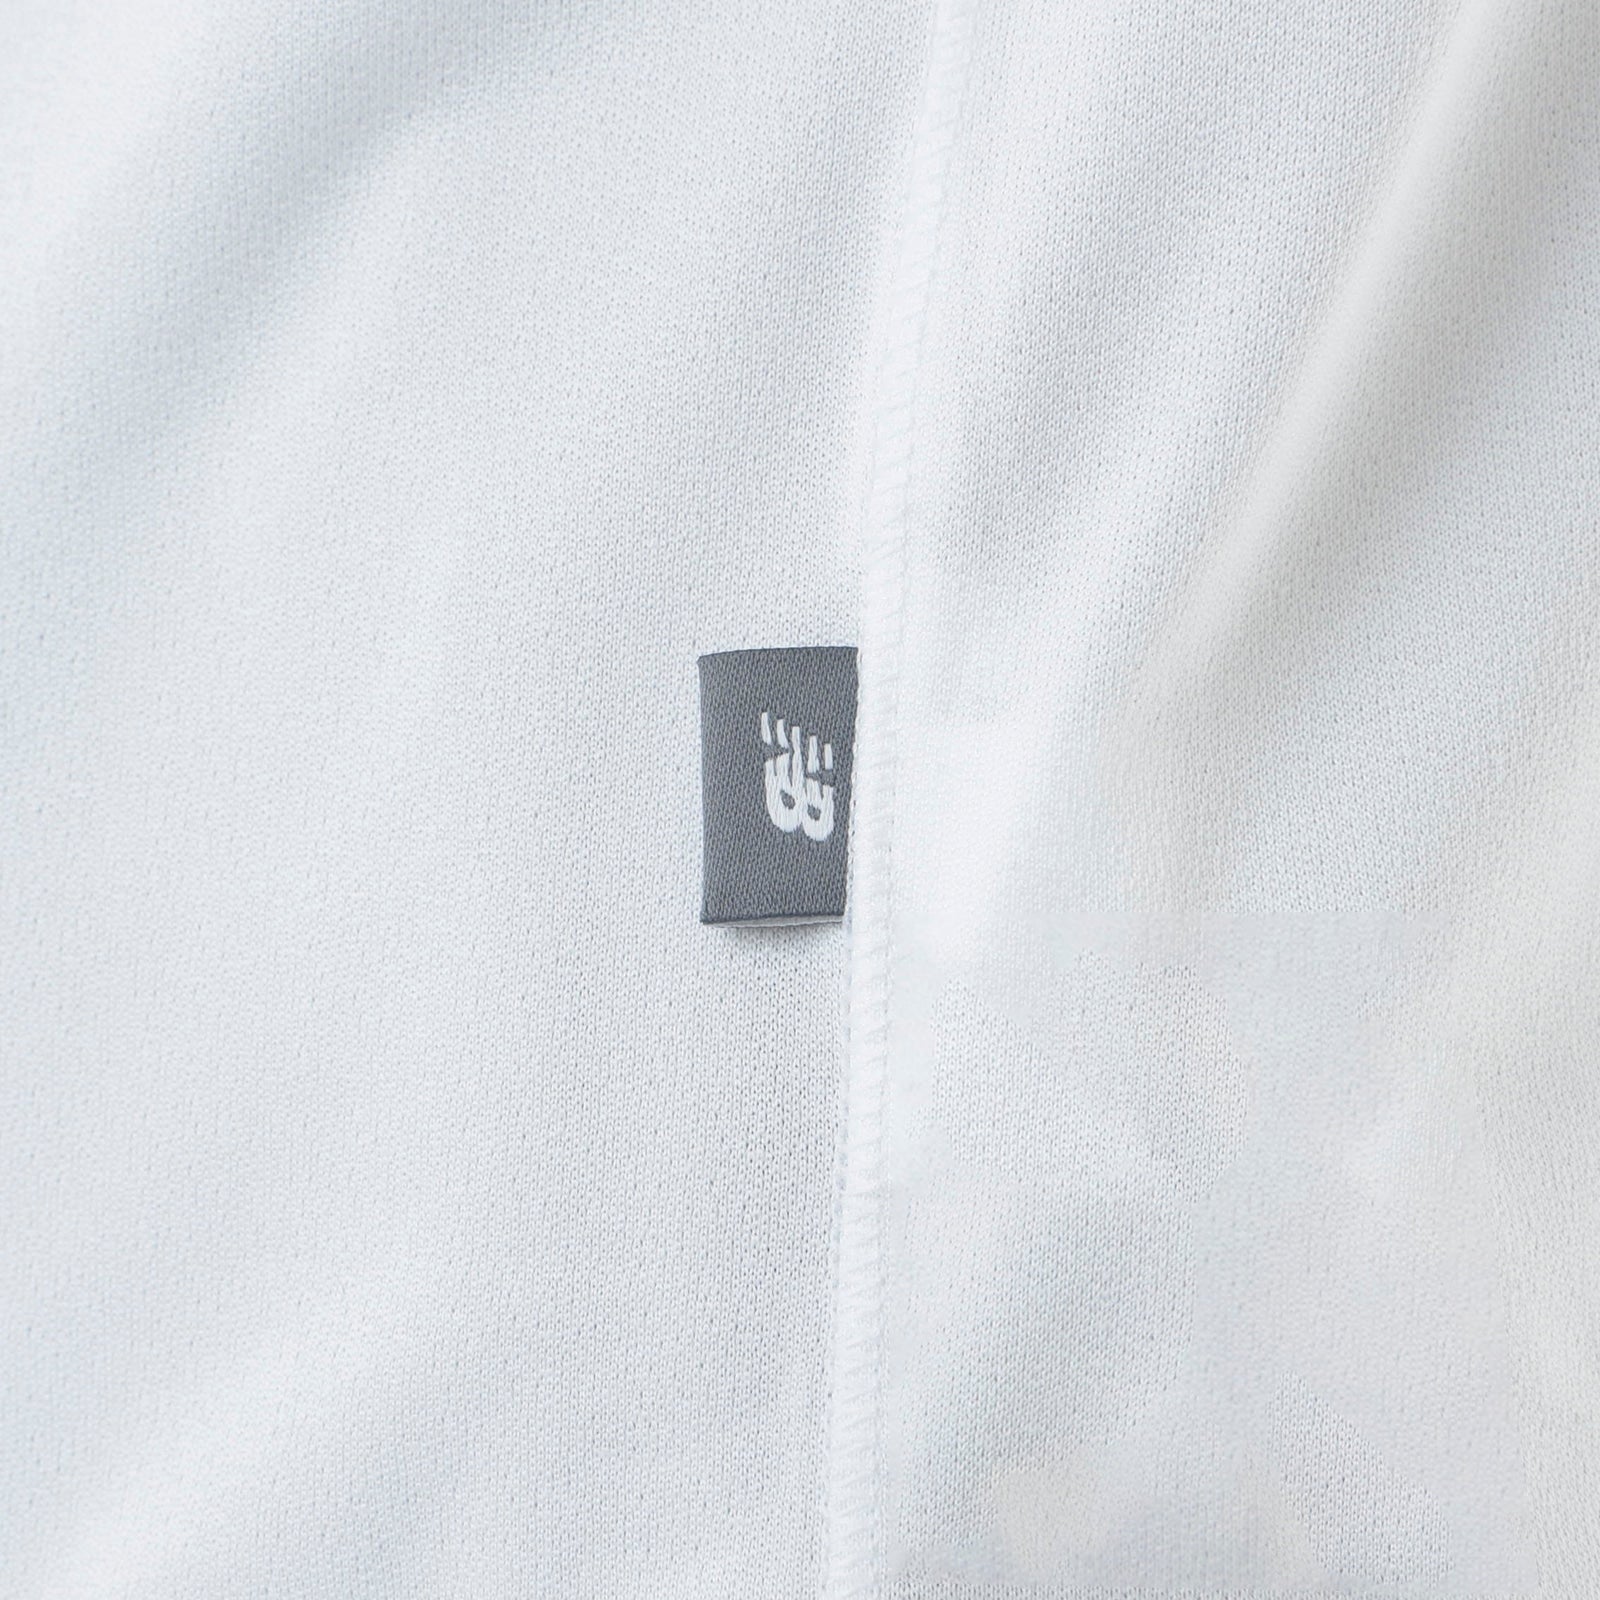 Performance Graphic Short Sleeve T-Shirt (Block Logo)